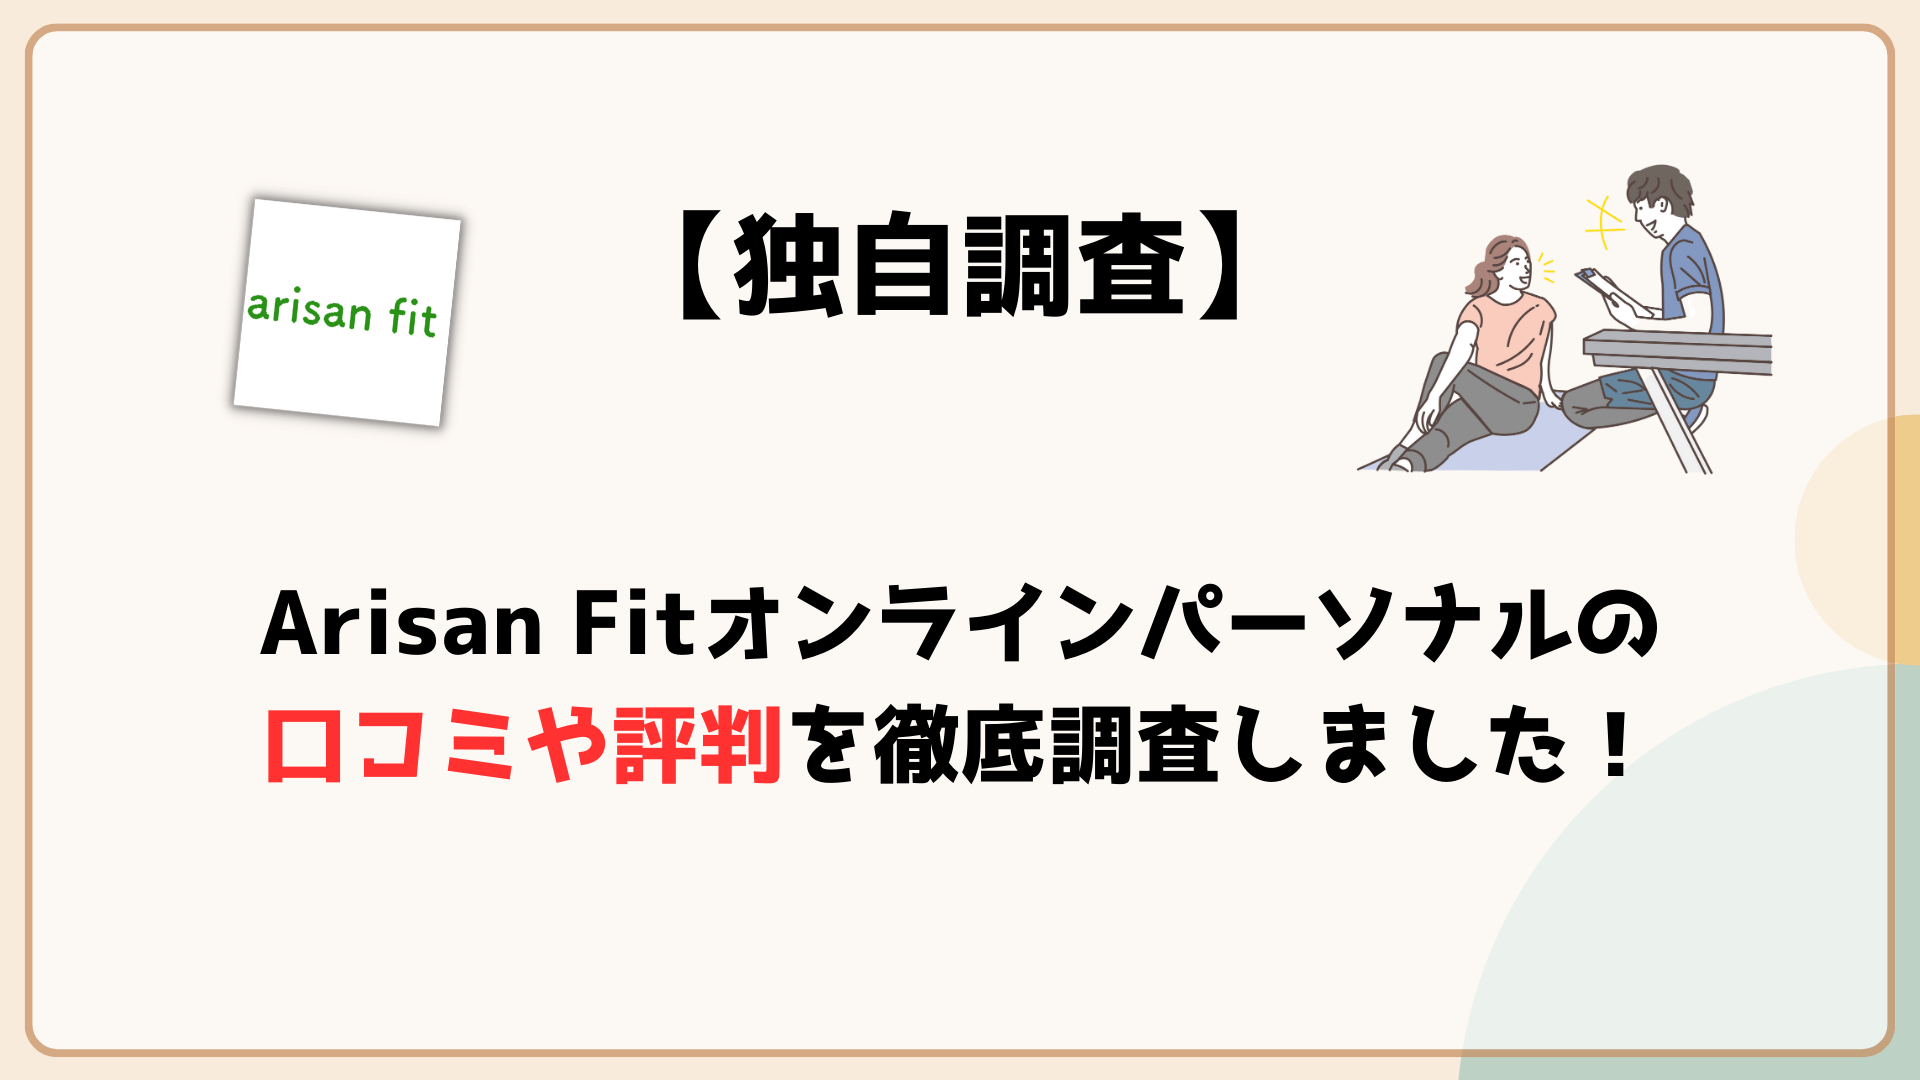 Arisan Fitオンラインパーソナル 口コミや評判